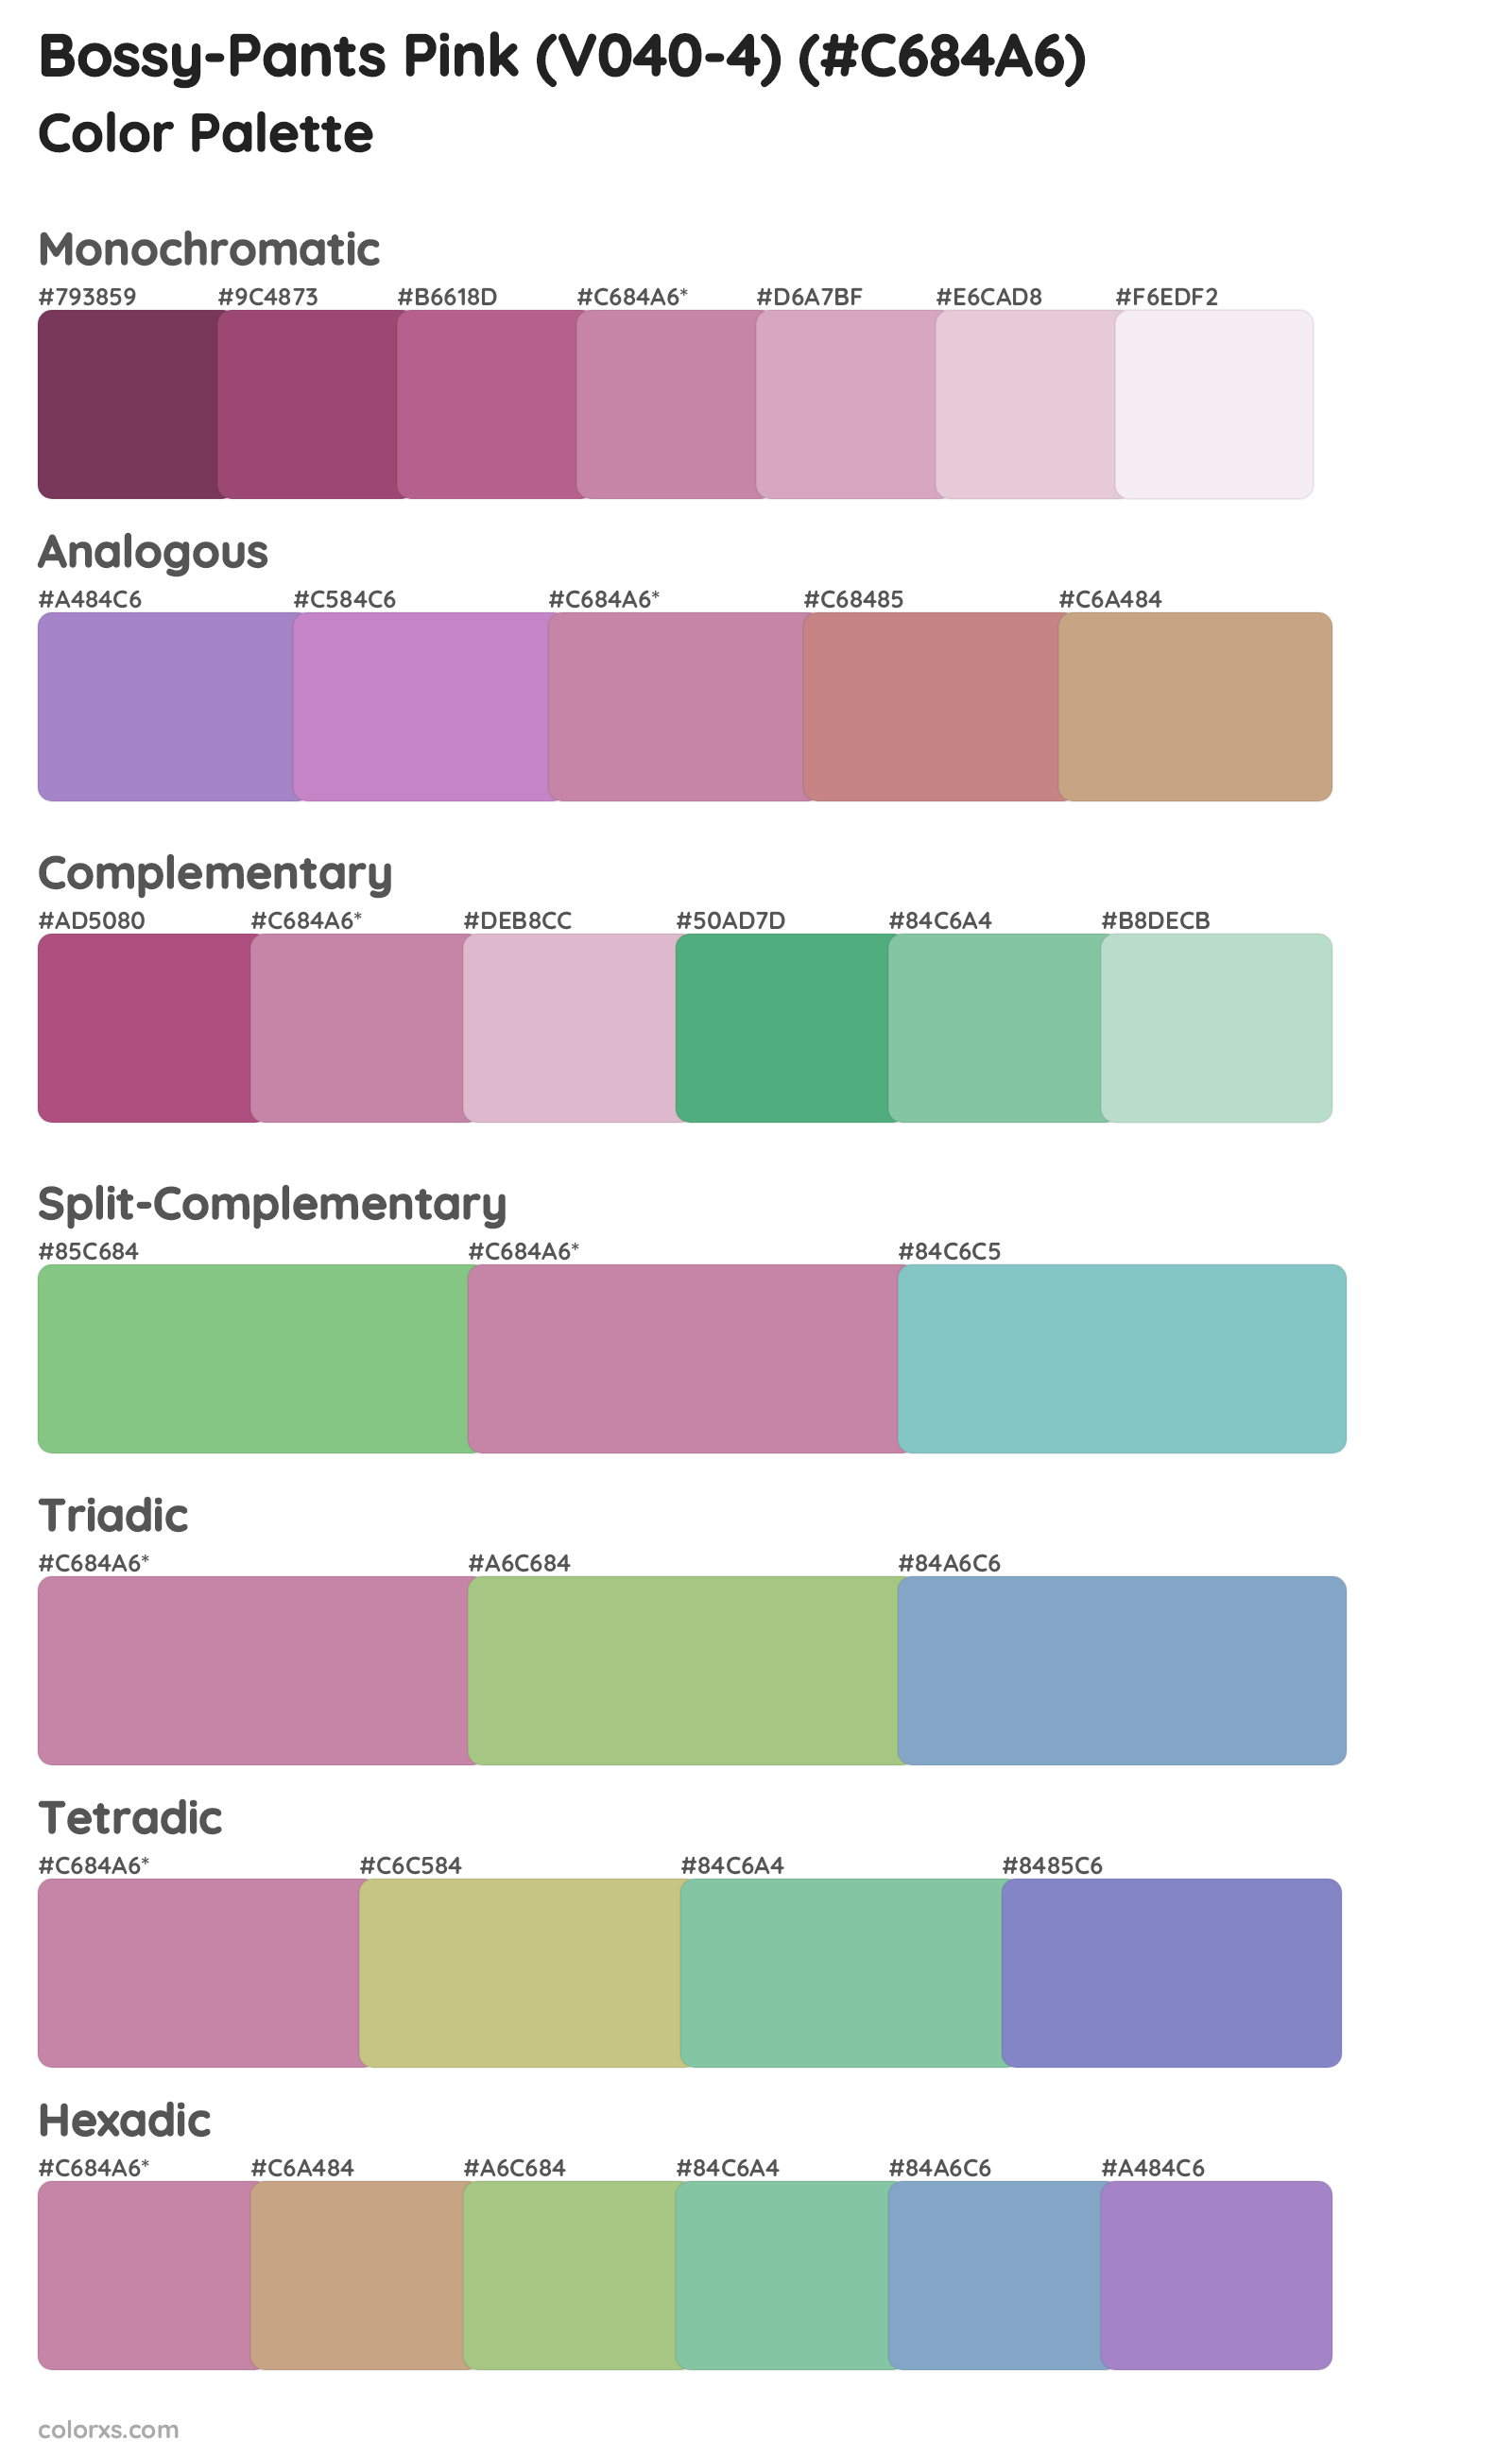 Bossy-Pants Pink (V040-4) Color Scheme Palettes